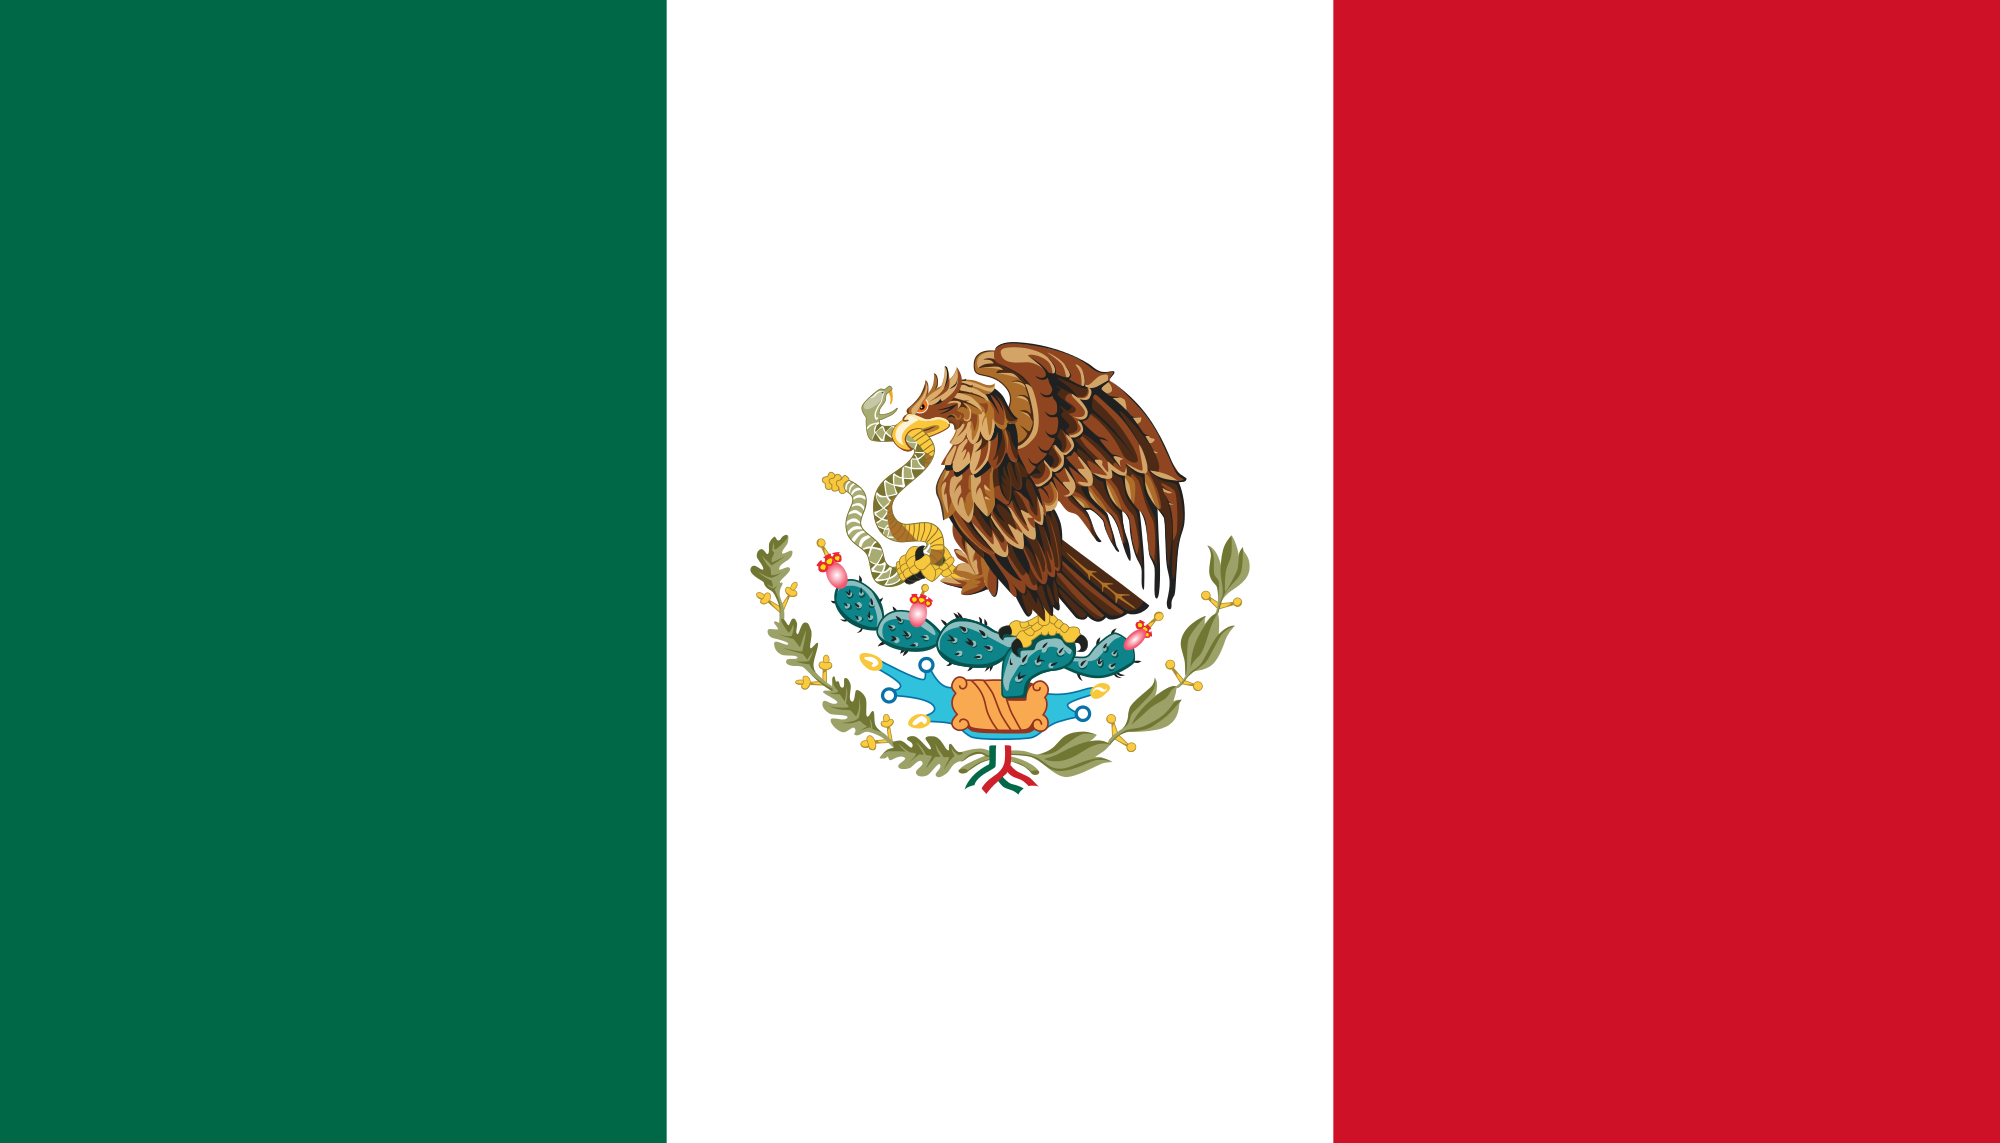 No sombre news in Mexico